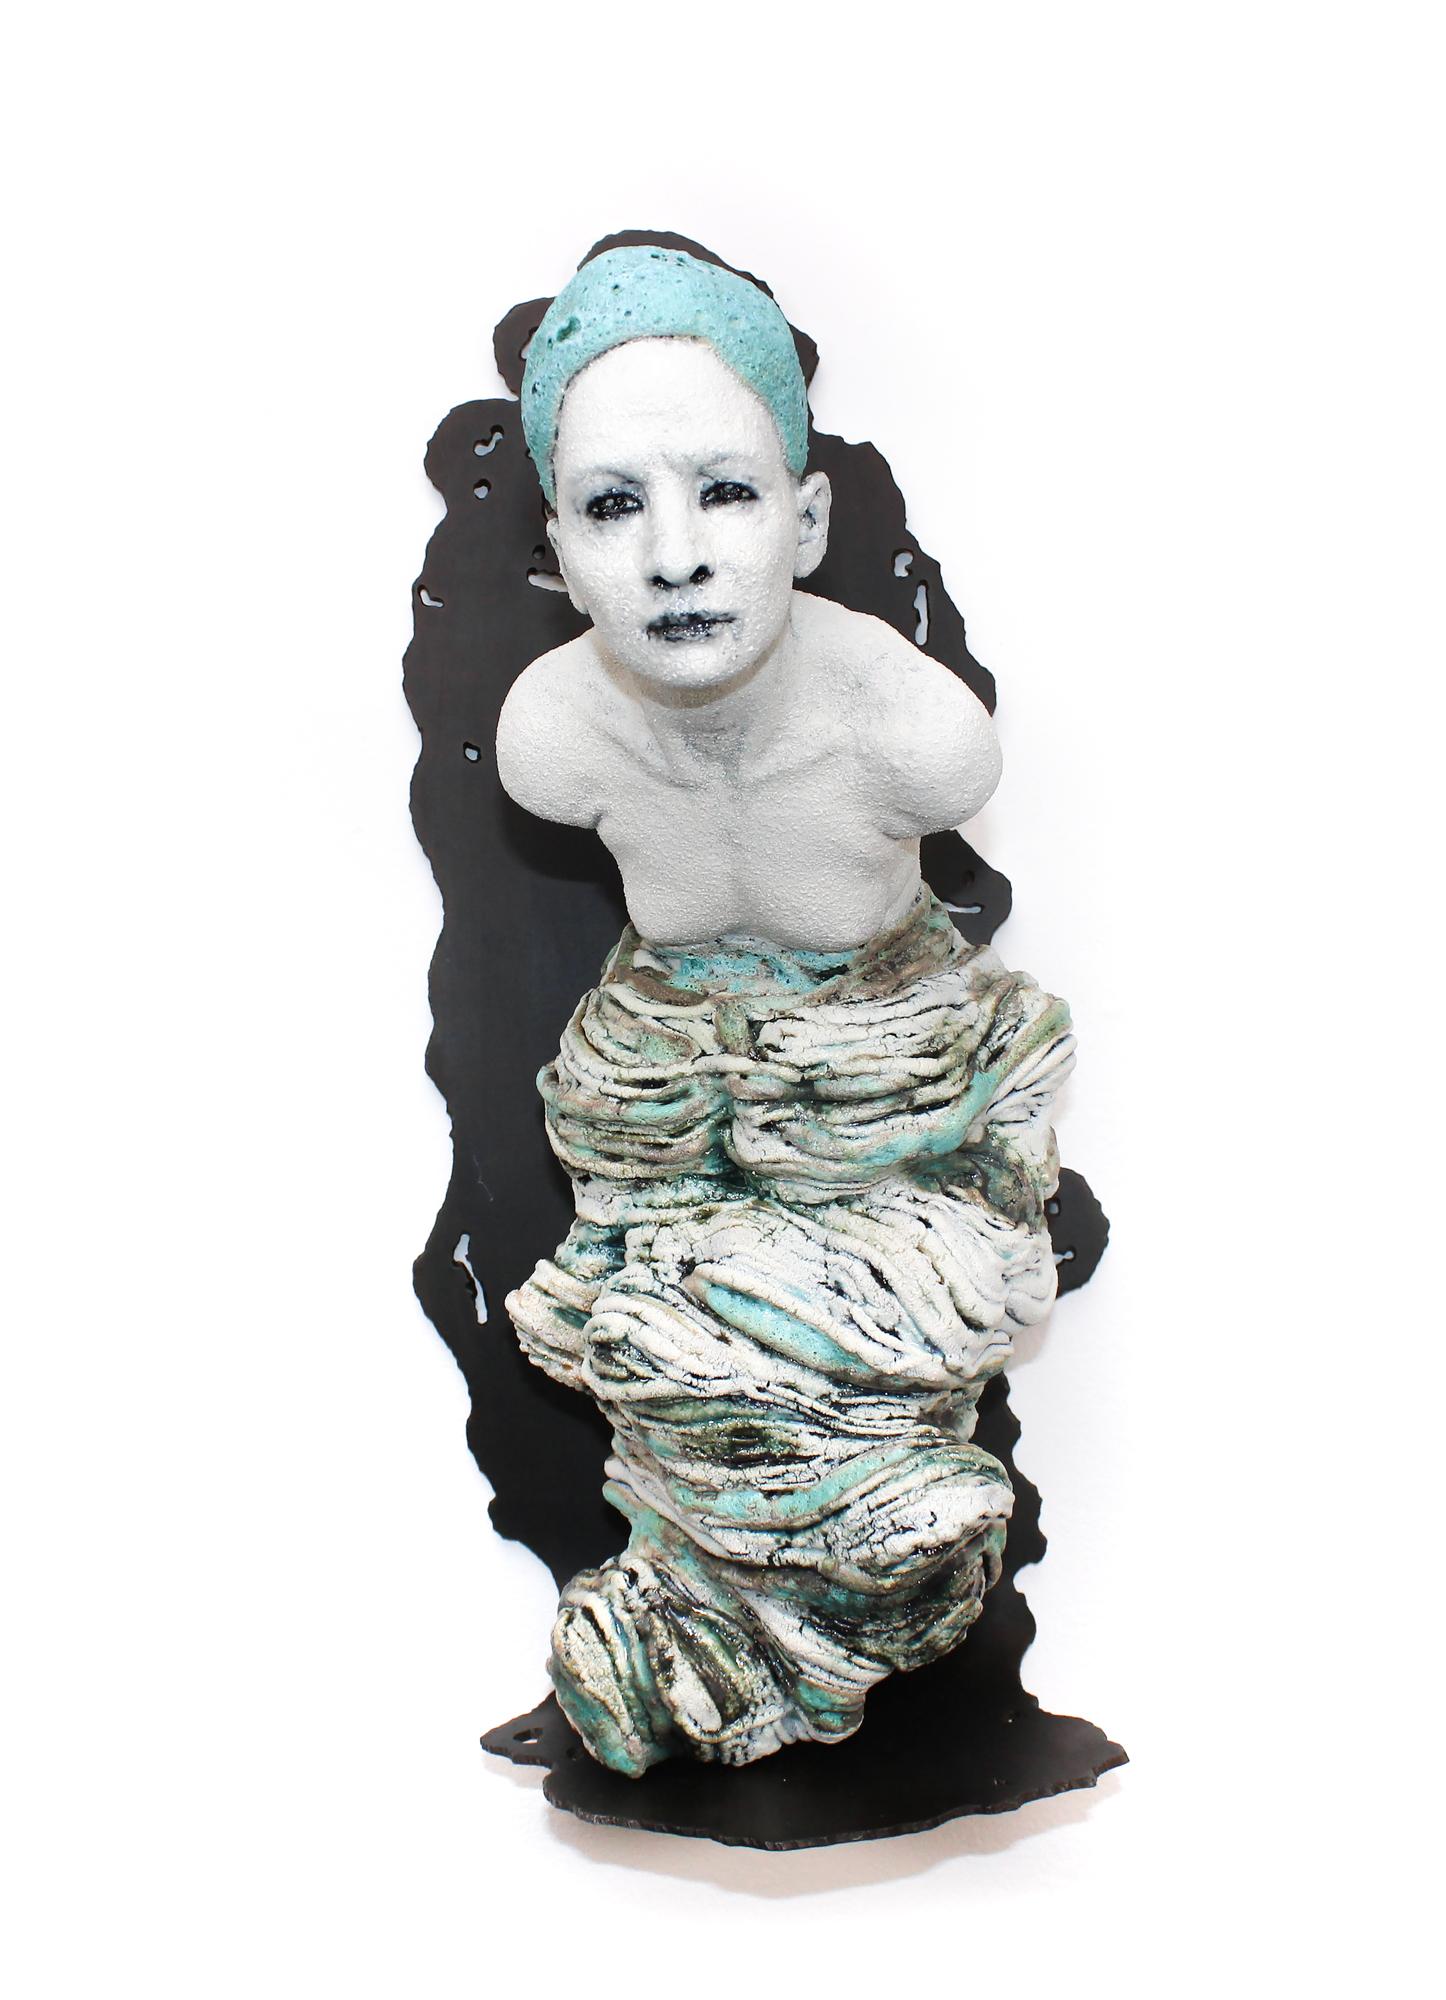 Sarah Louise Davey Figurative Sculpture - "Tethered", Wall-Mounted Sculpture, Figurative, Ceramic, Metal, Blue, White